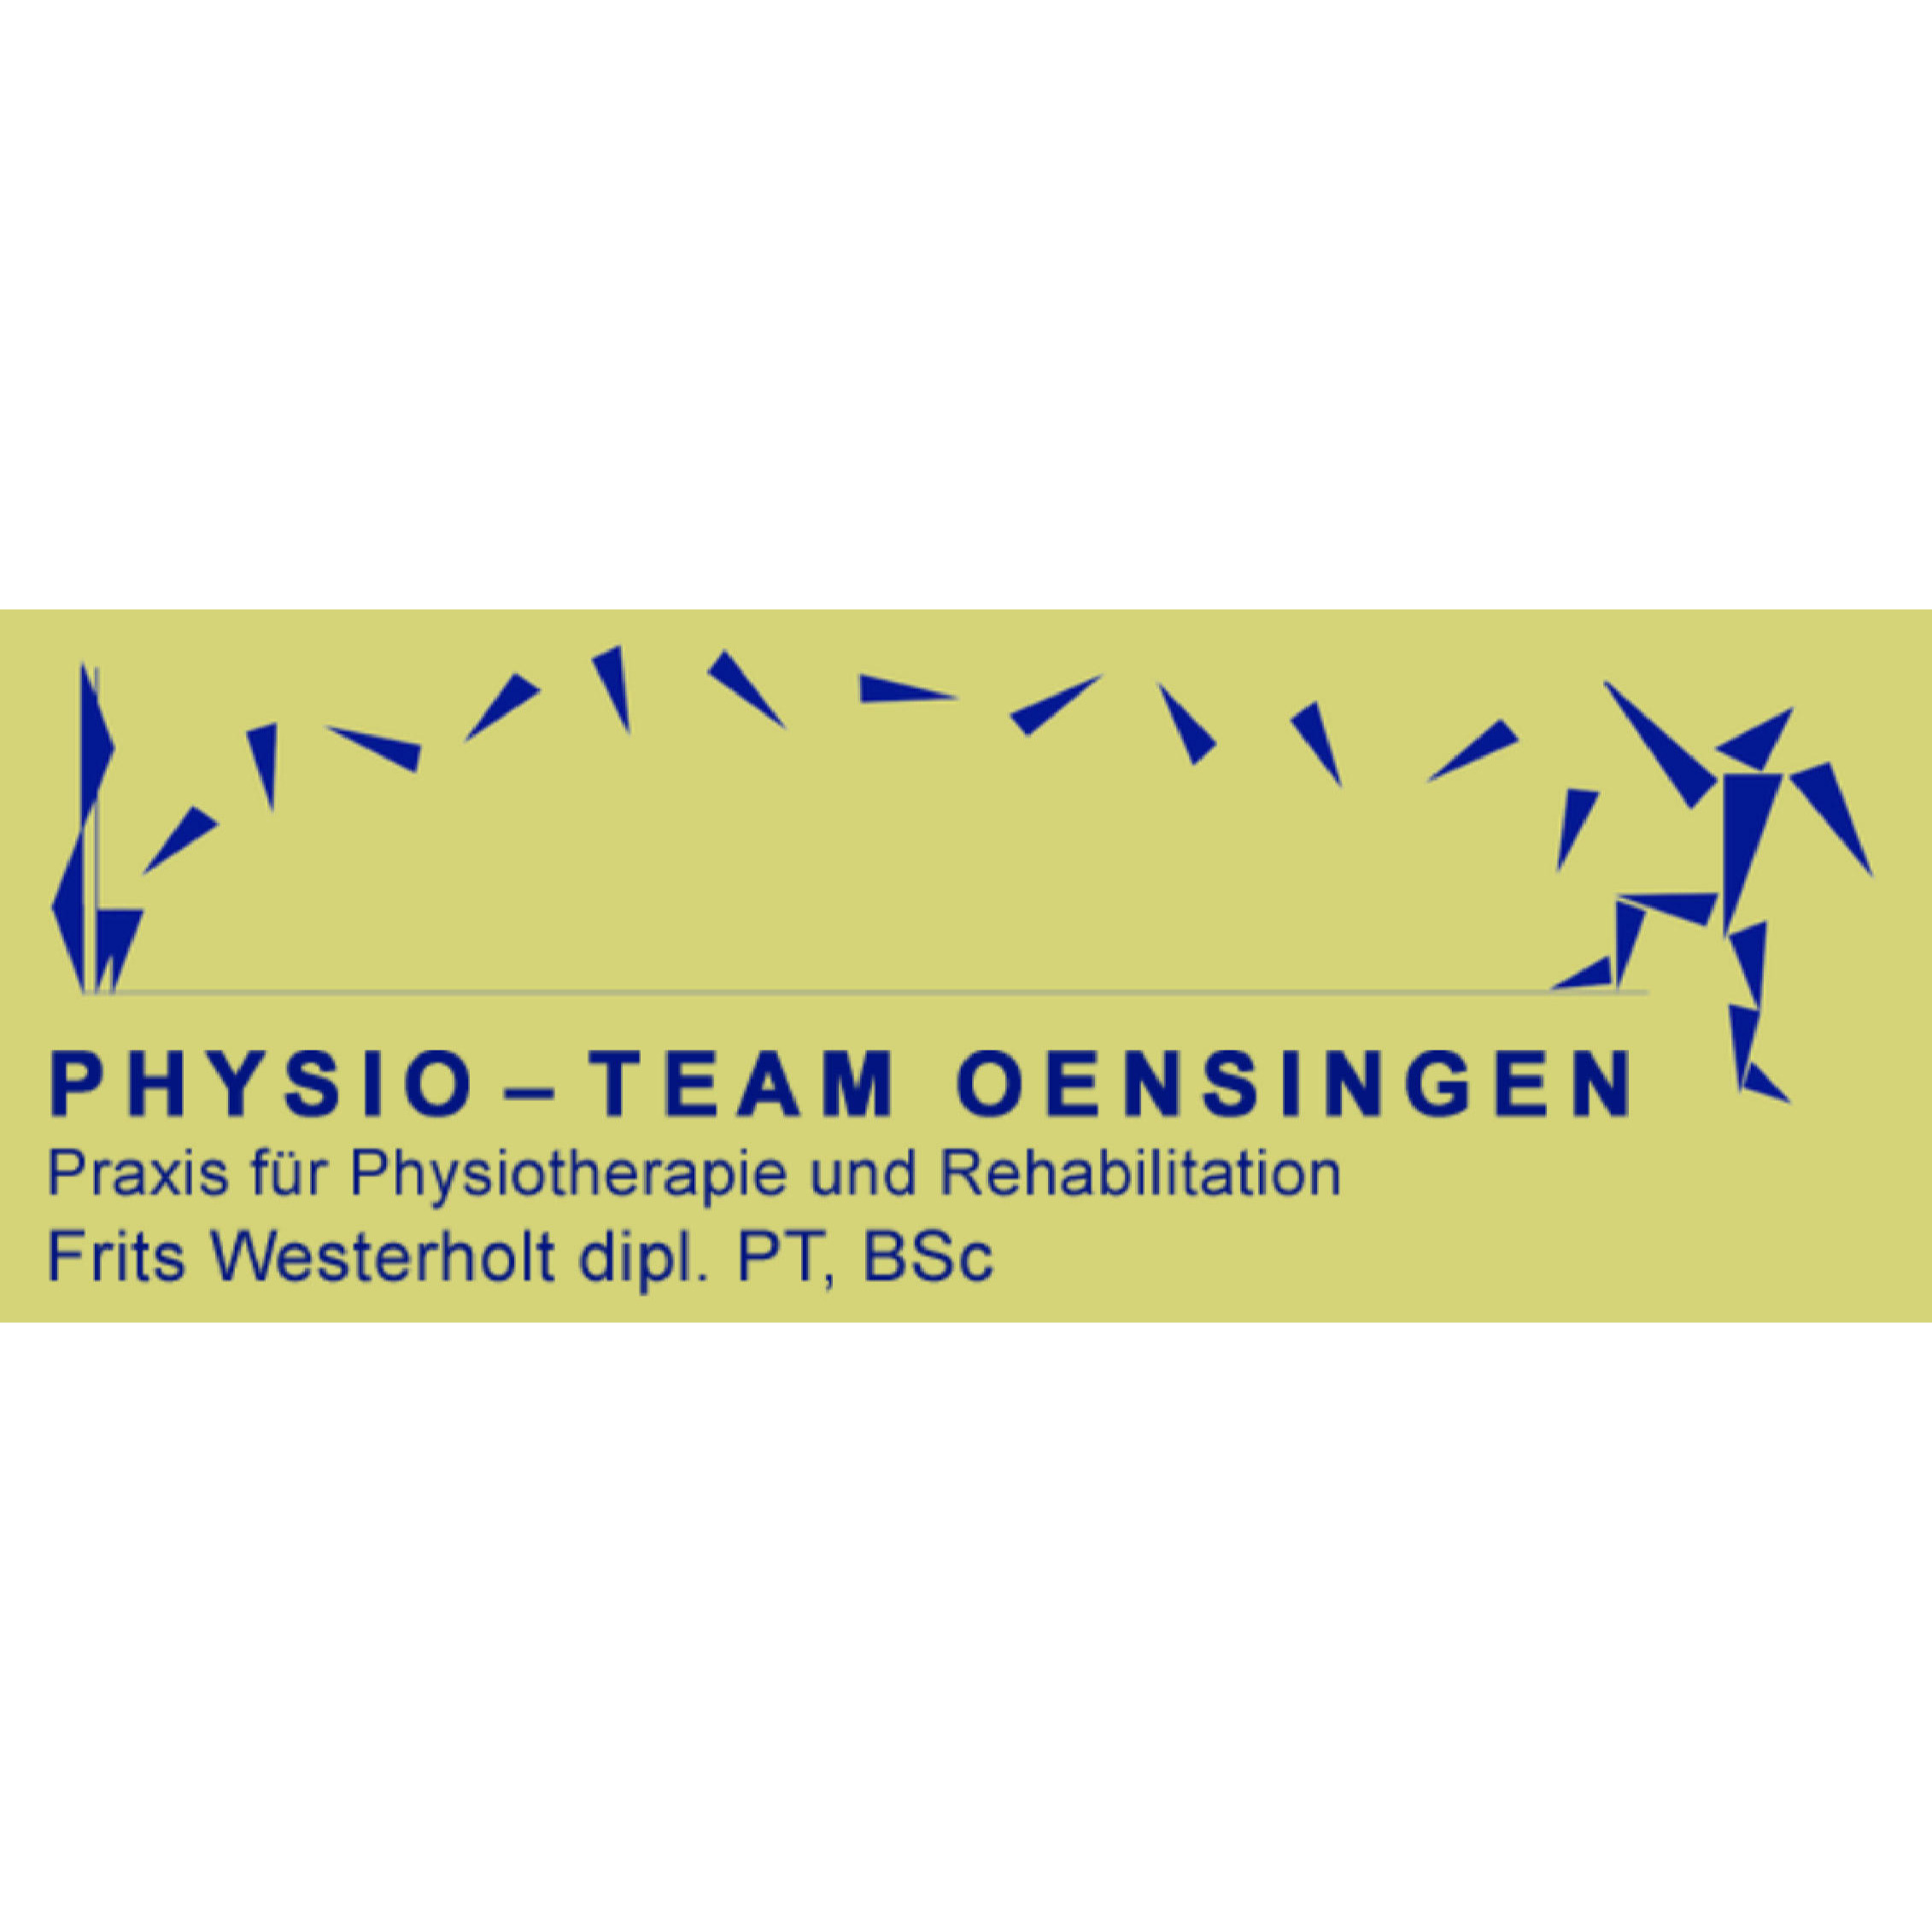 PHYSIO - TEAM OENSINGEN Logo